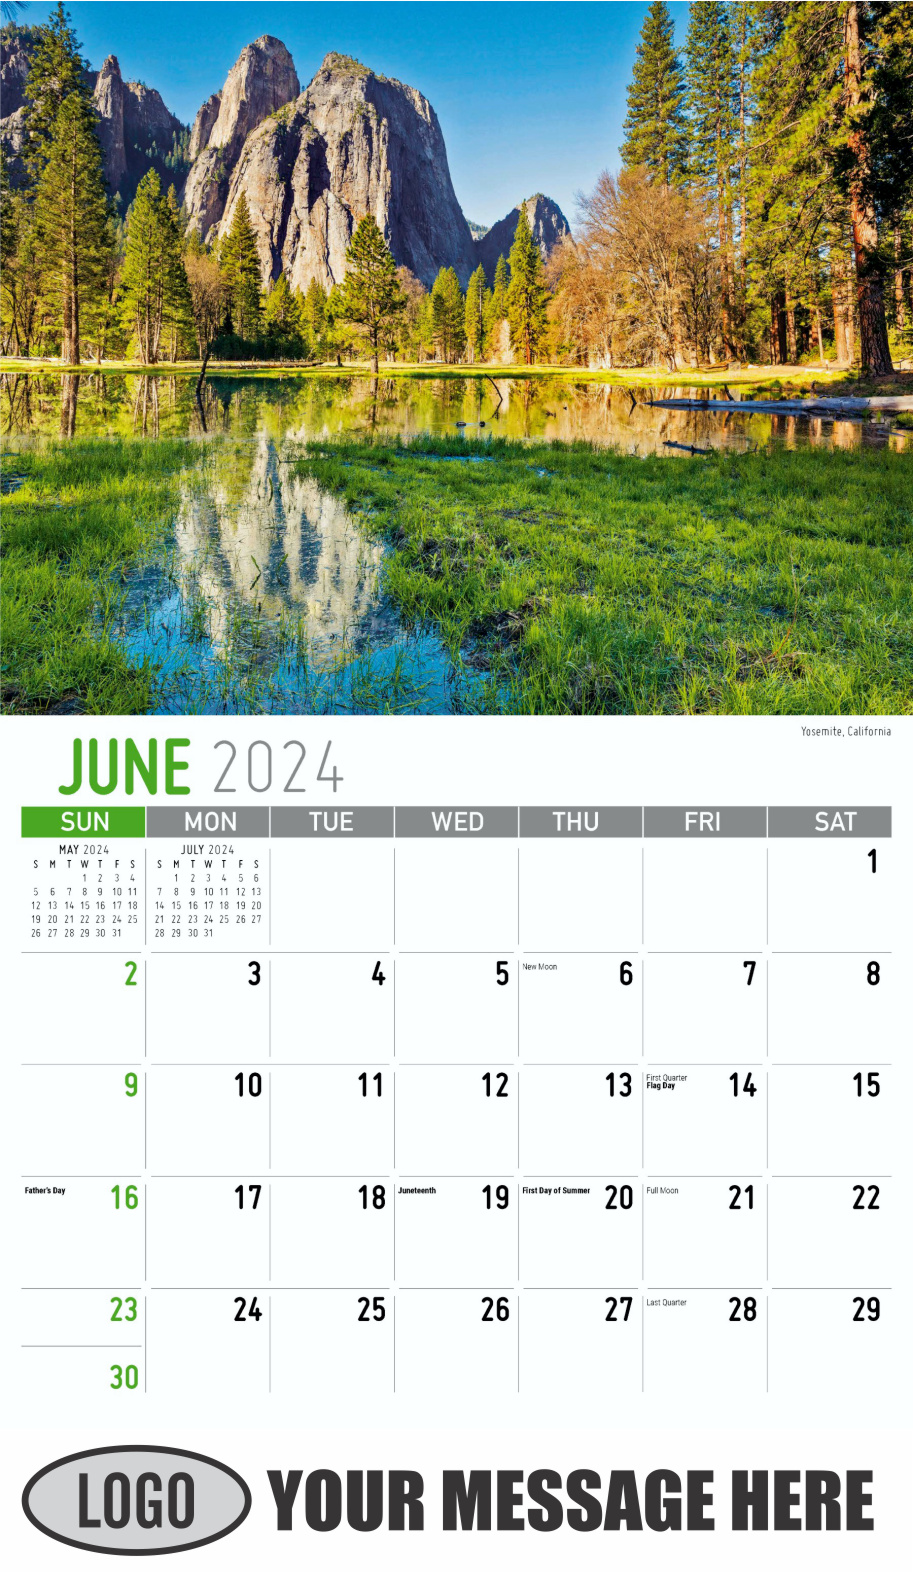 Scenes of America 2024 Business Advertising Wall Calendar - June